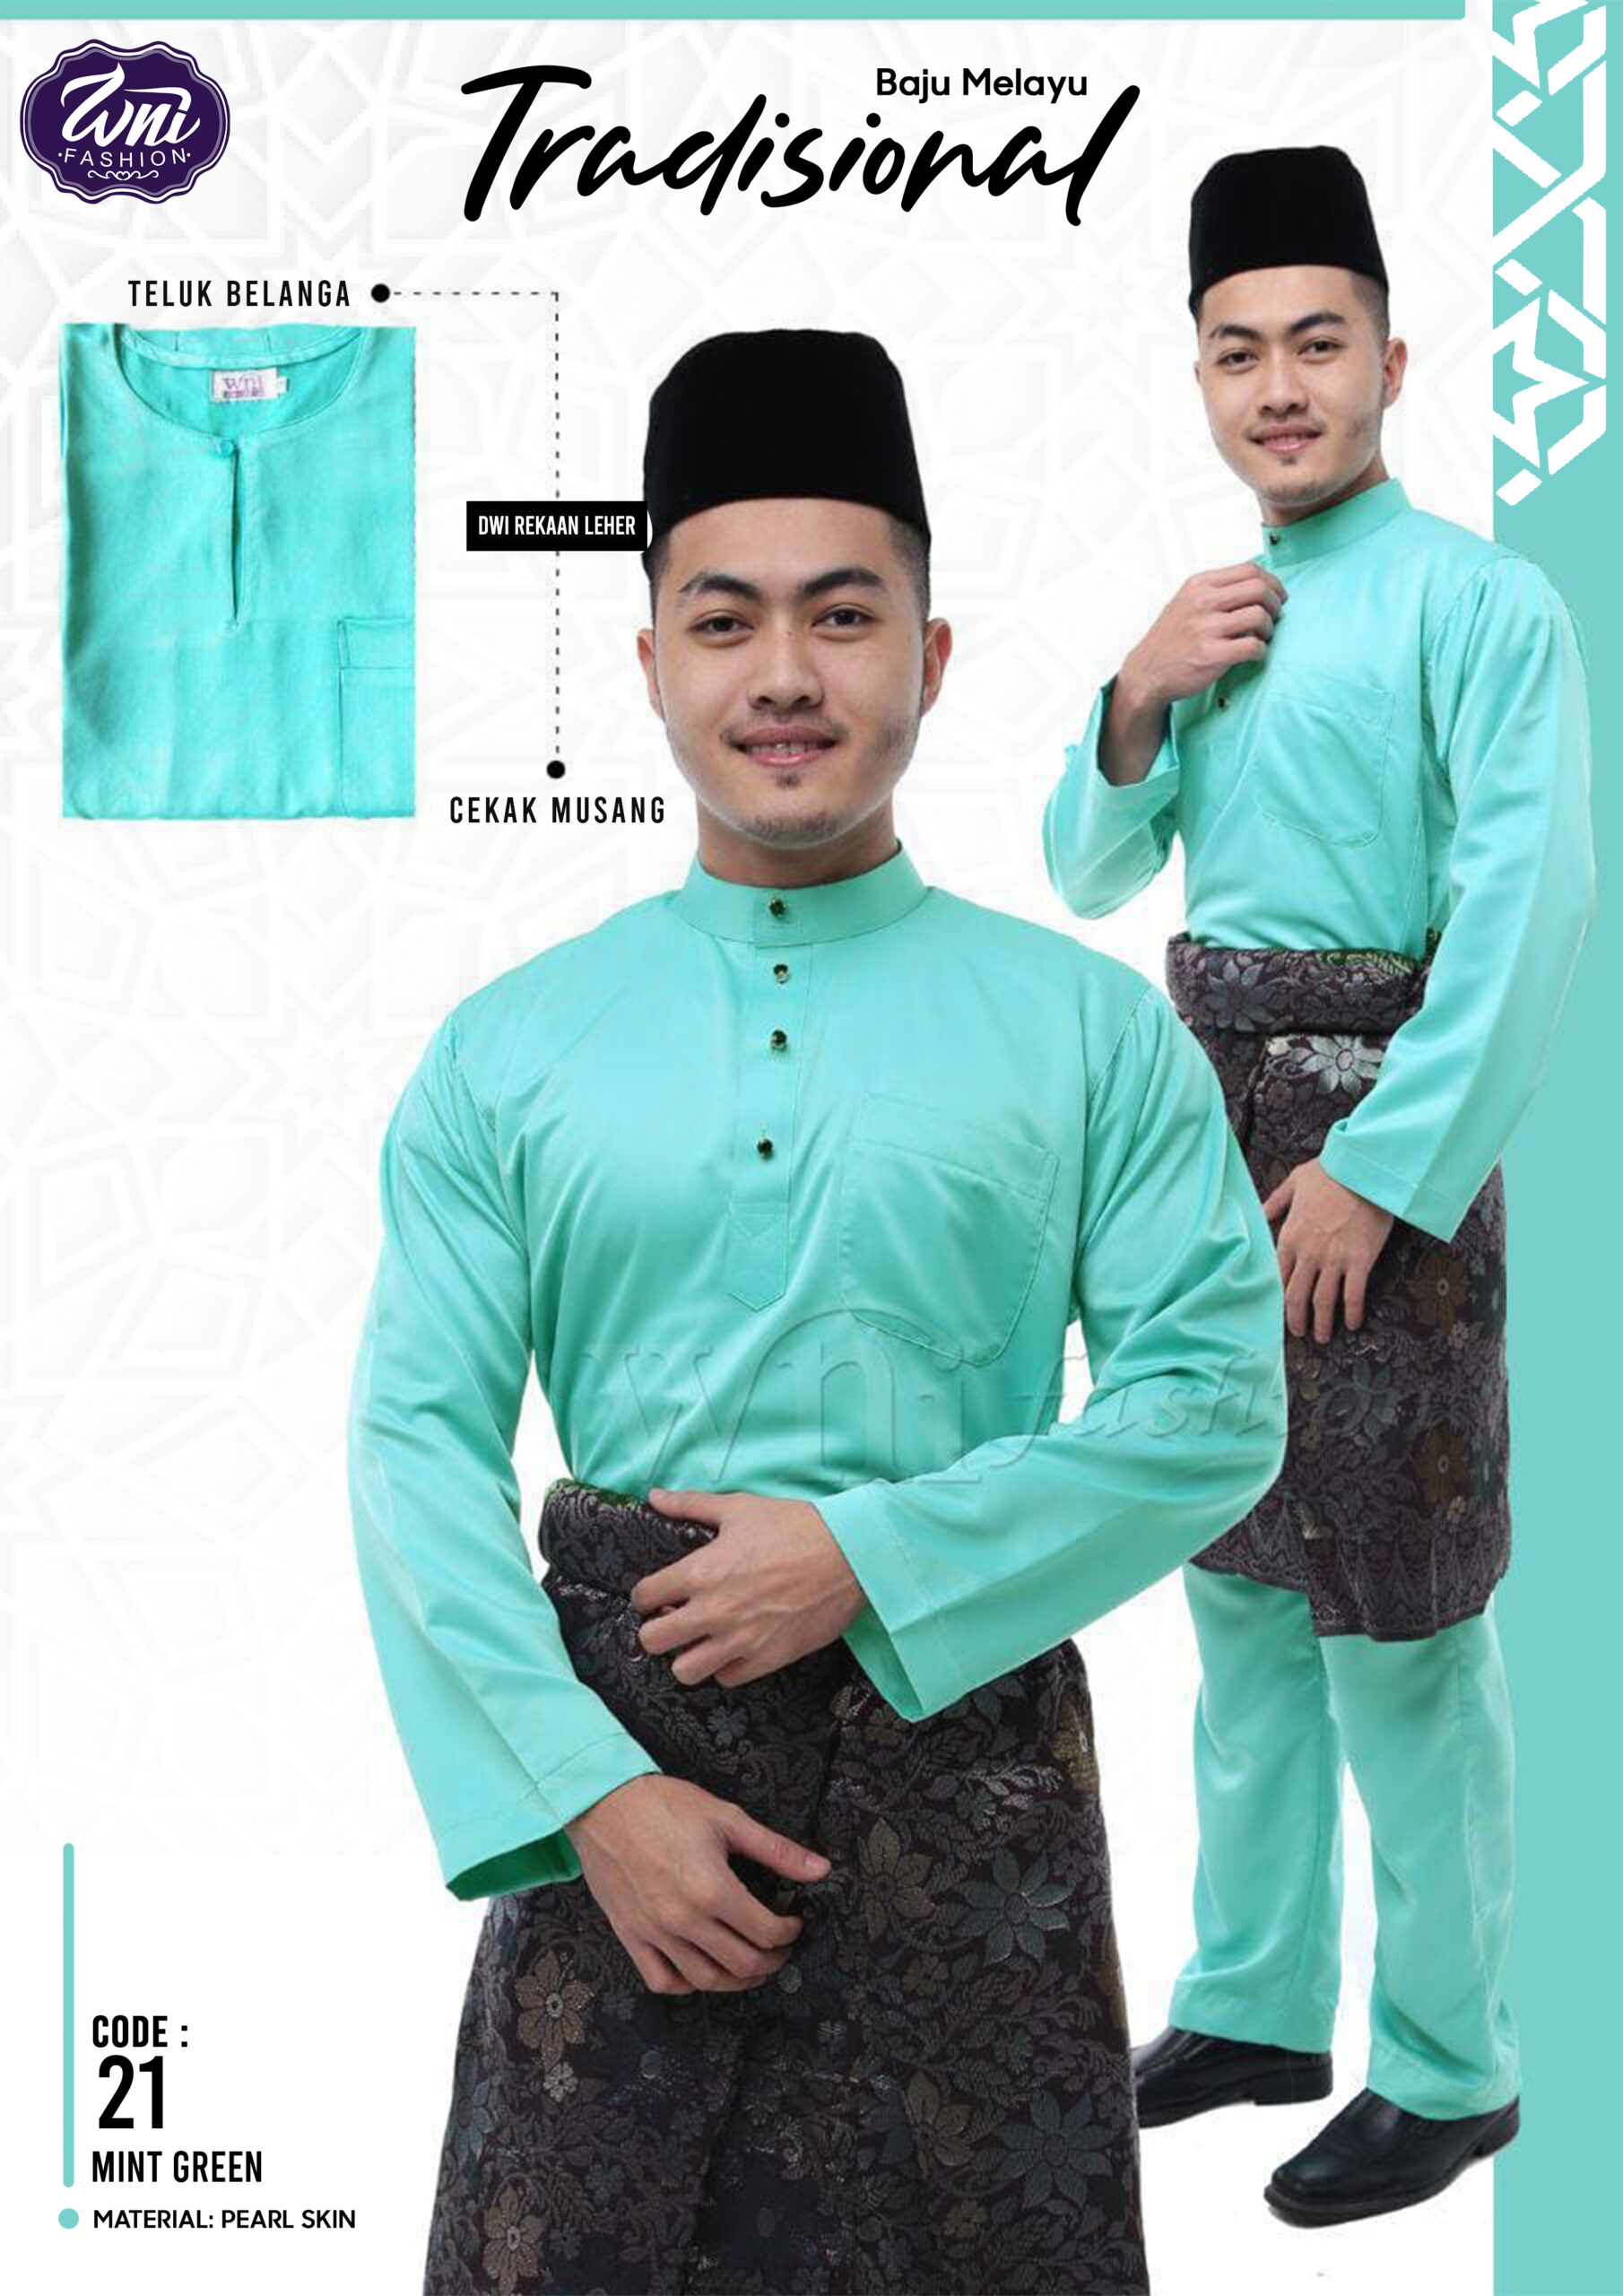  Baju  Melayu  Warna  Hijau Mint